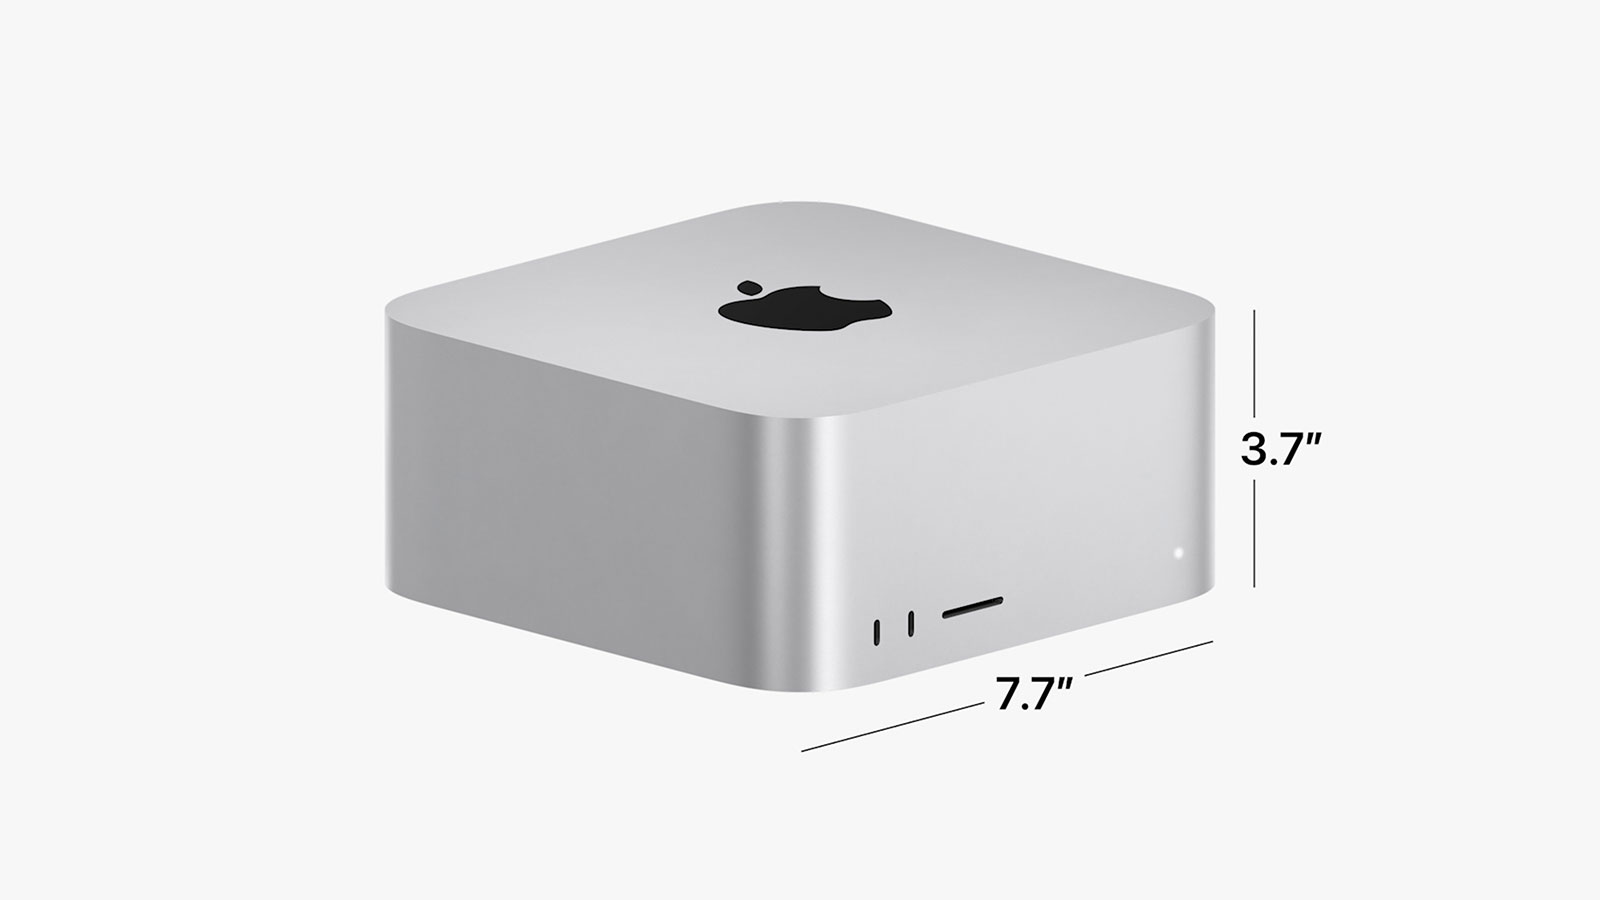 Buy Mac Studio - Apple